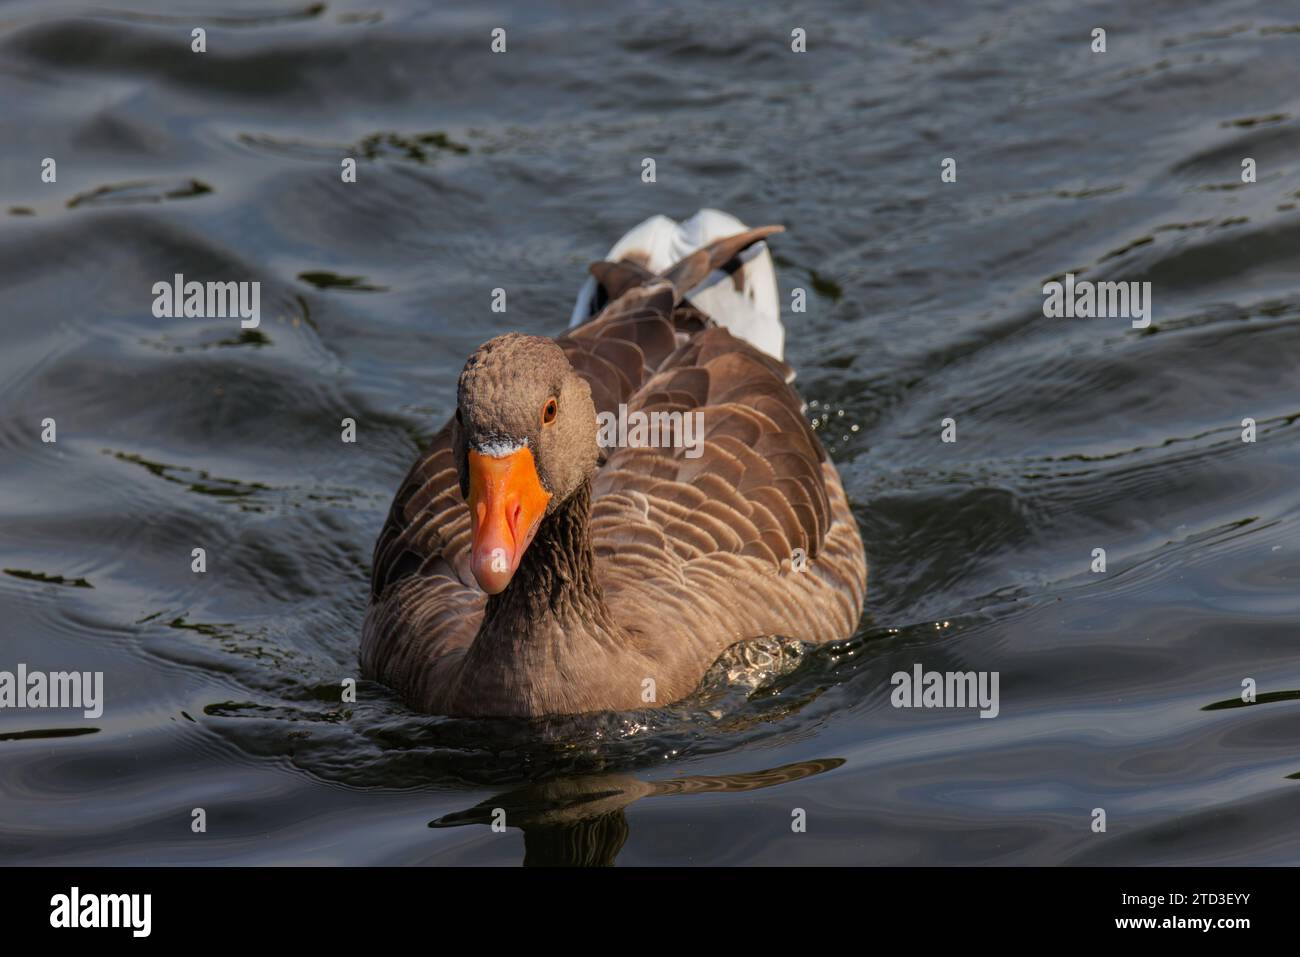 Greylag goose swimming in lake Stock Photo